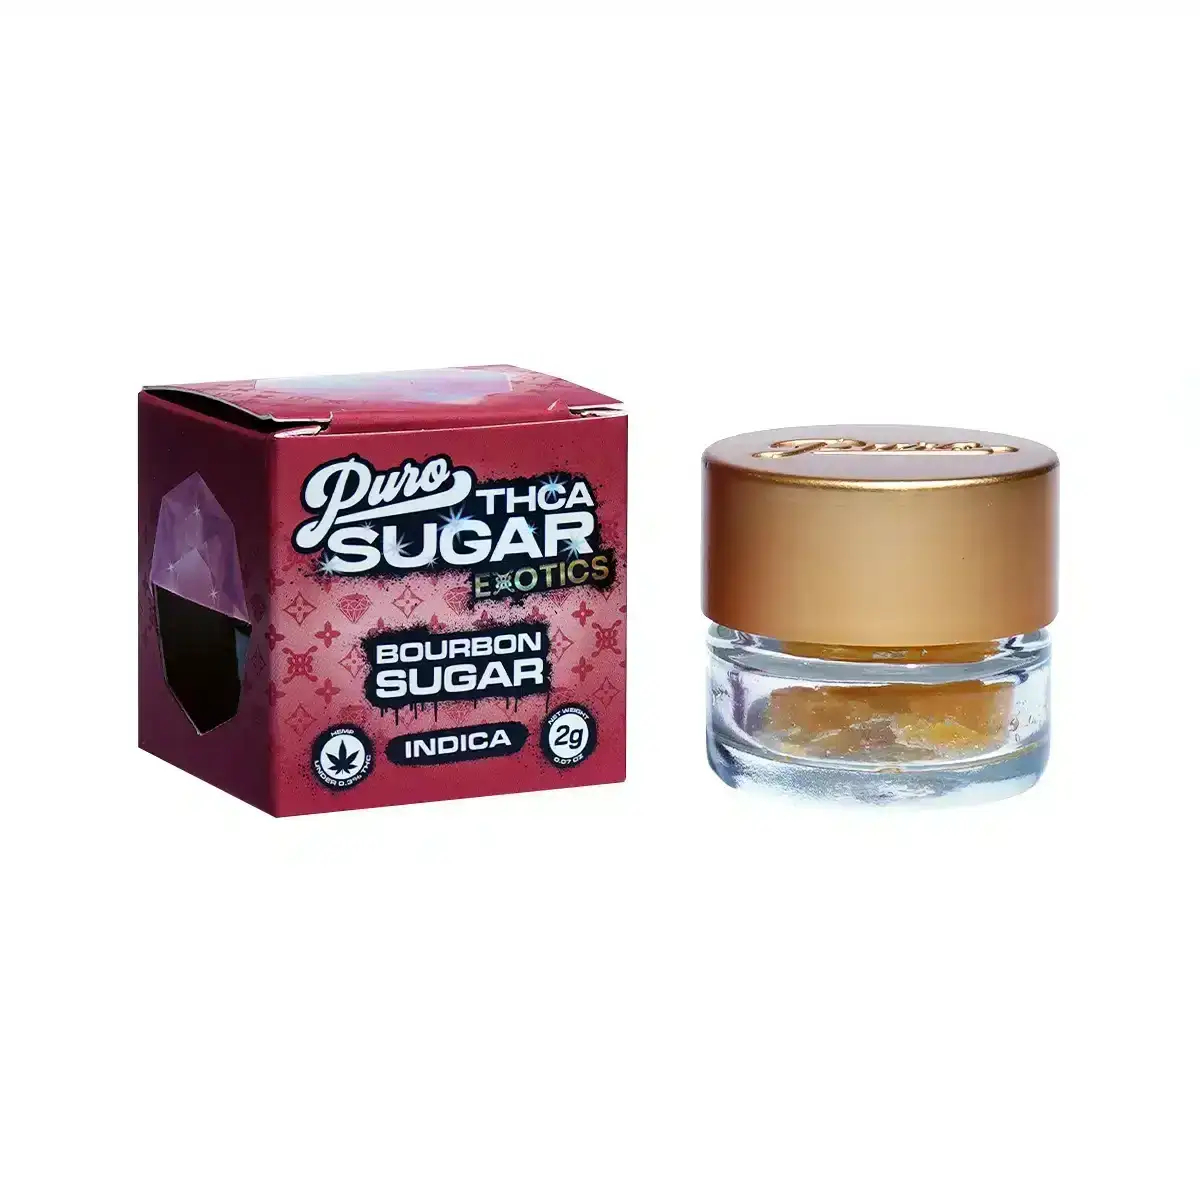 Image of Puro Exotics Sugar THC-A Dabs 2g - Bourbon Sugar